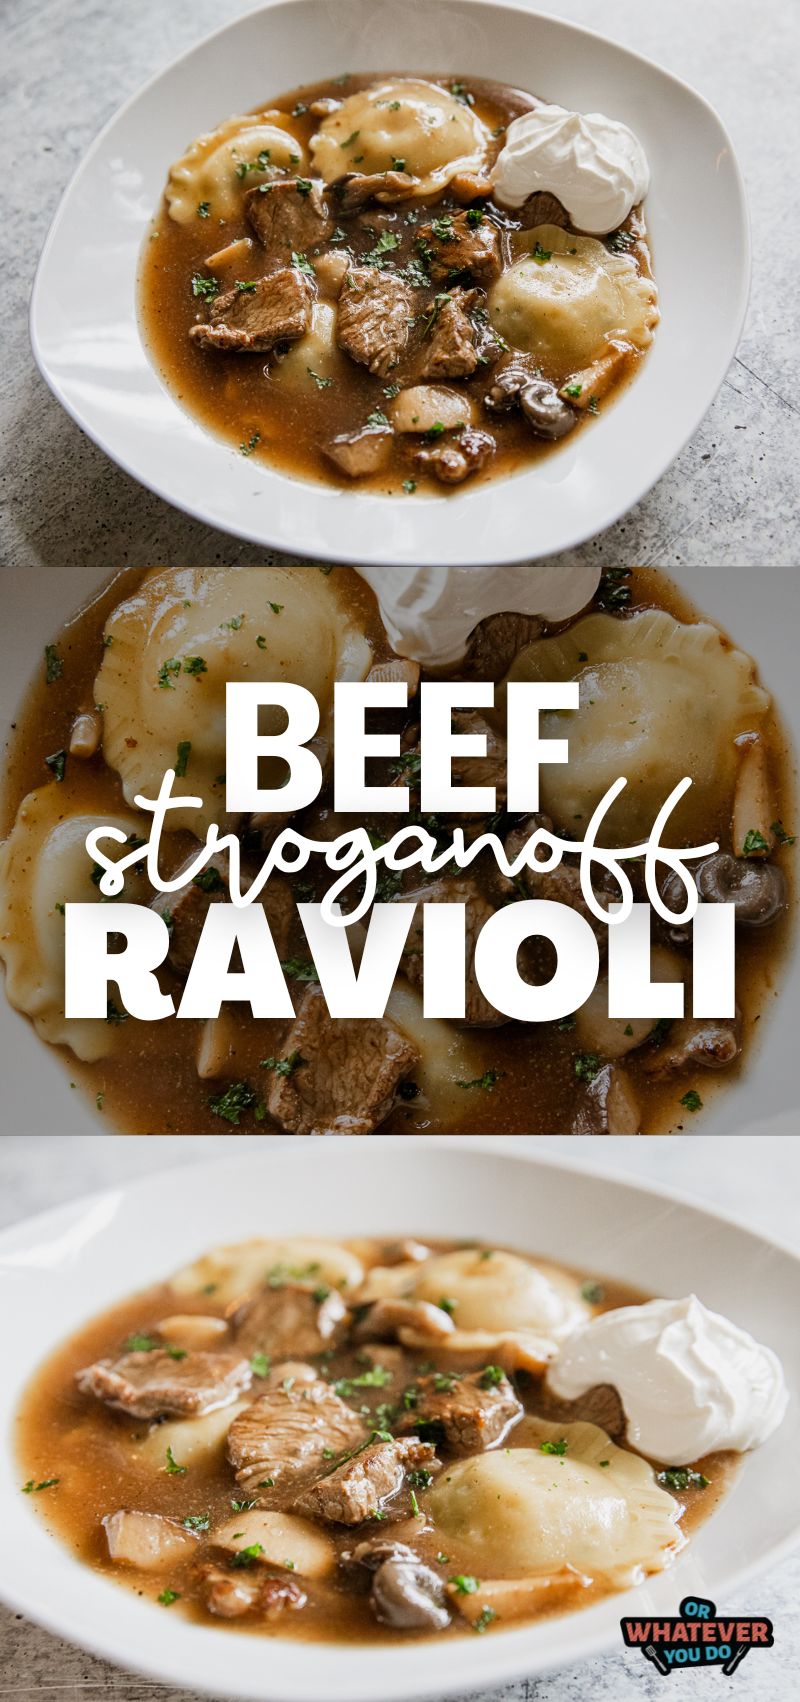 Beef Stroganoff Ravioli